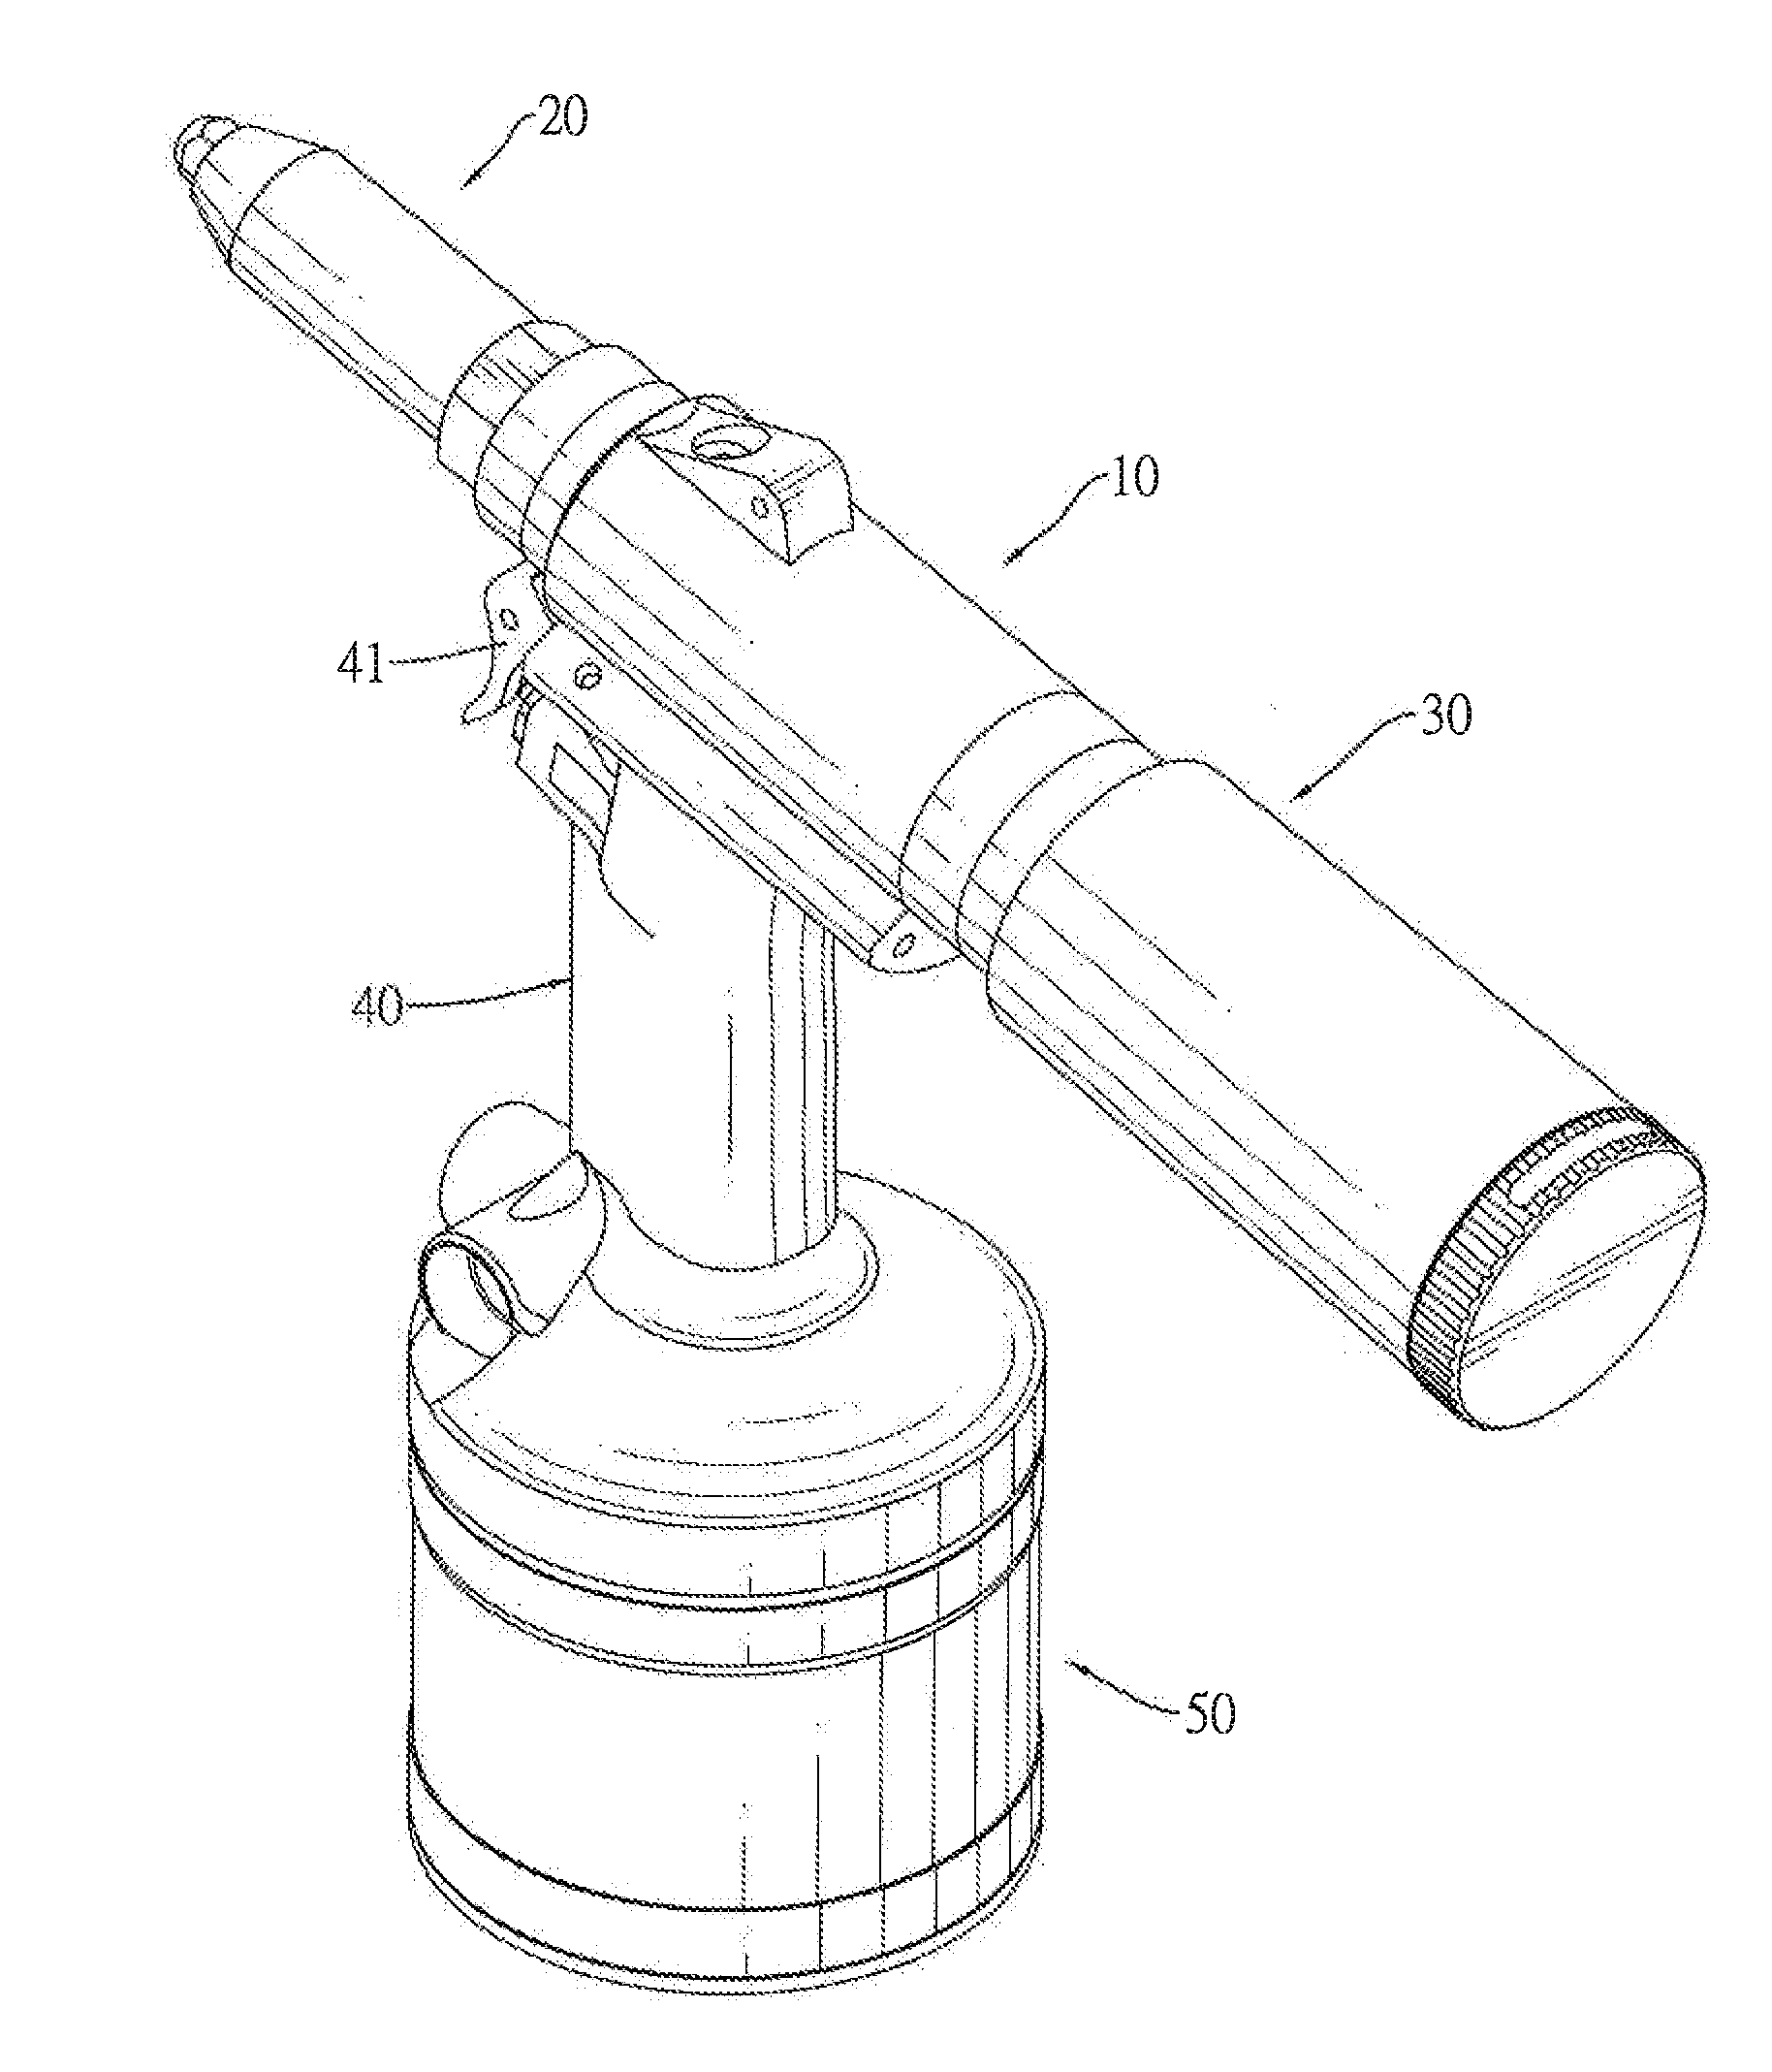 Barrel assembly for a rivet gun